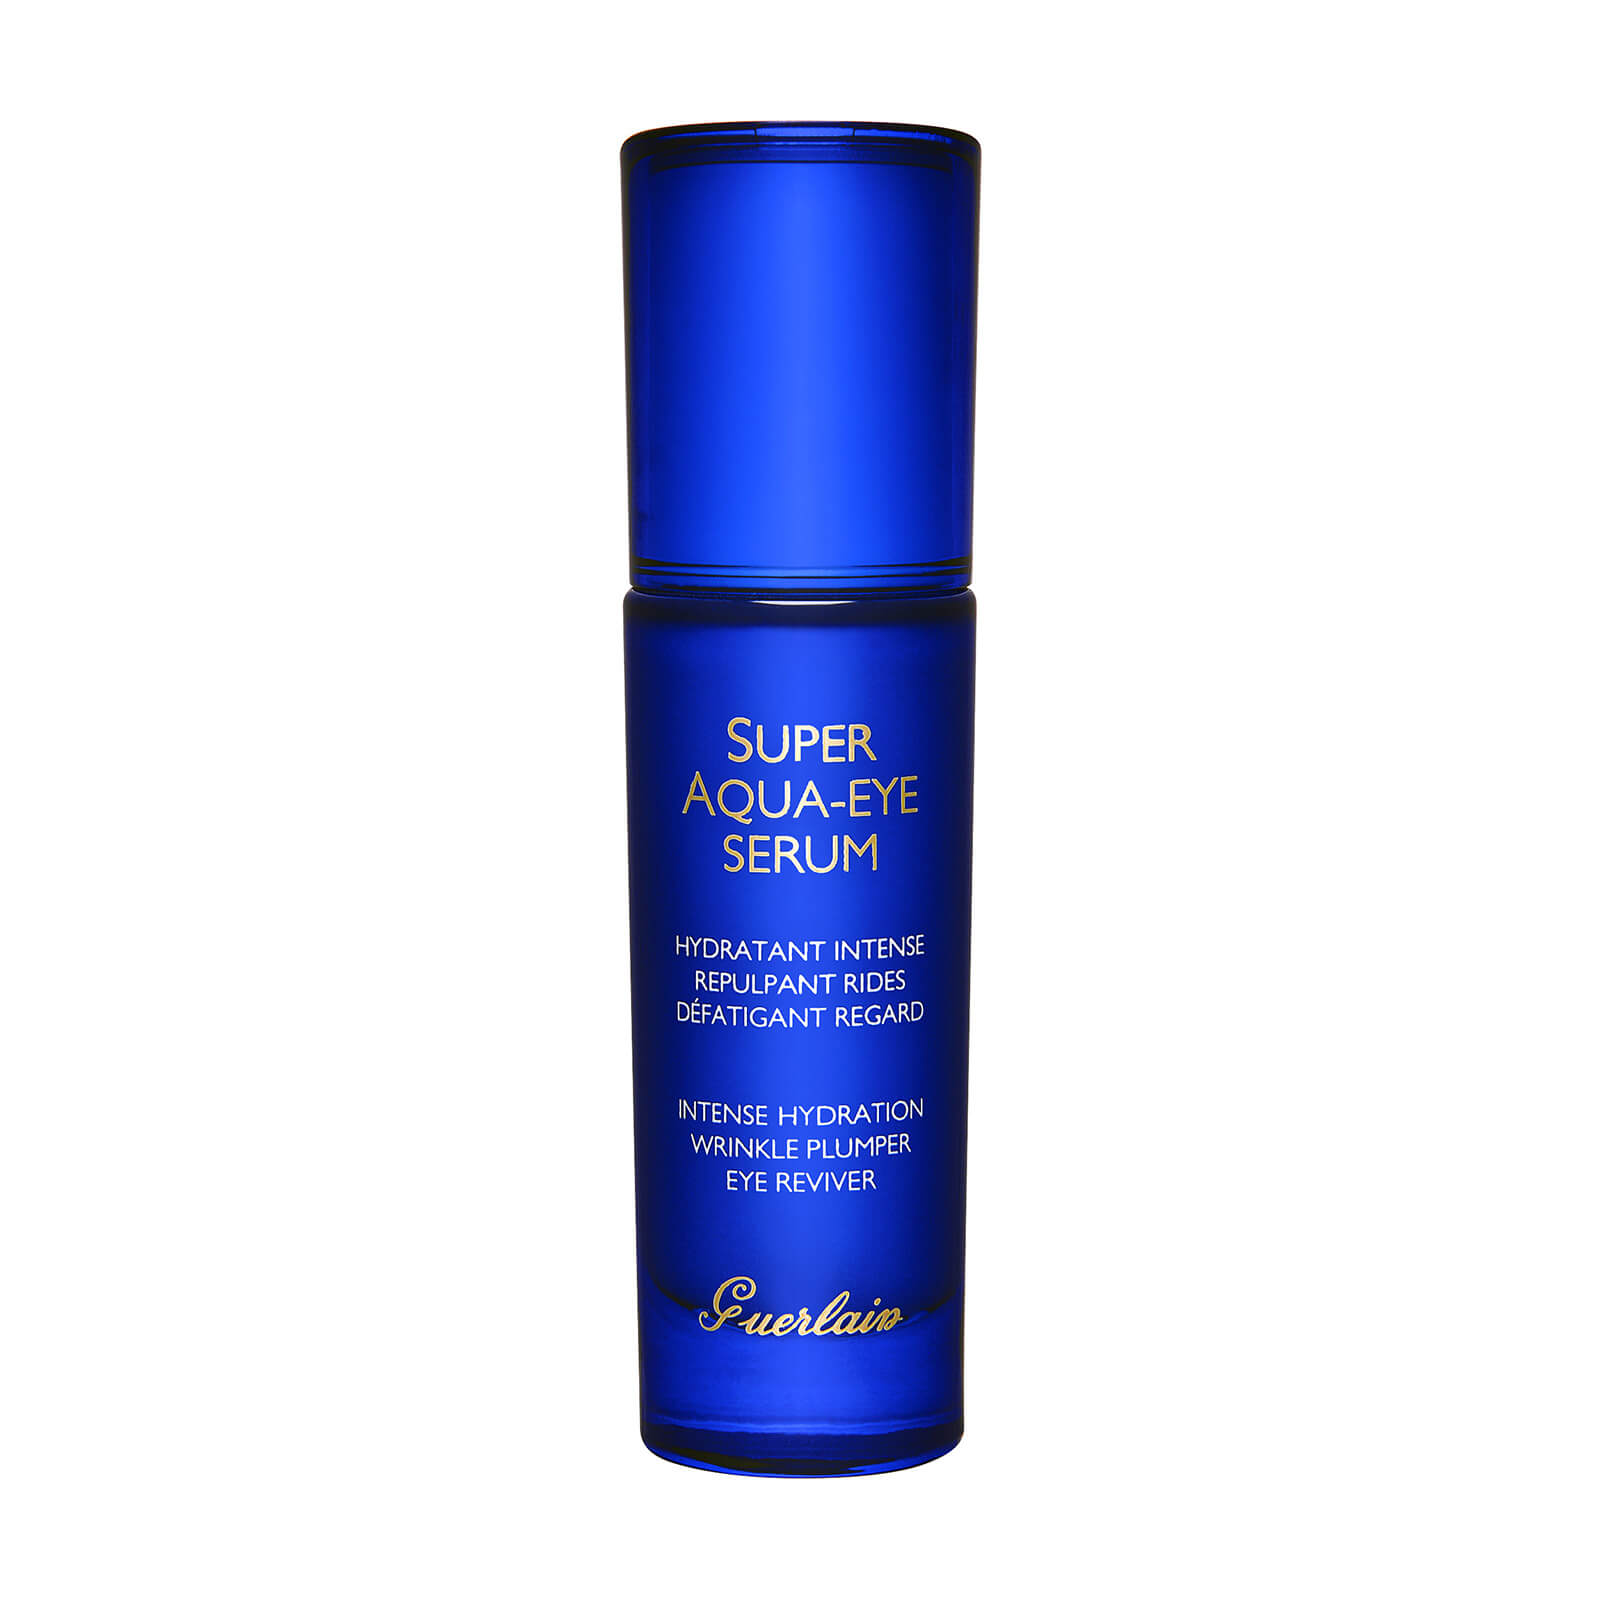 Super Aqua-Eye Serum Intense Hydration Wrinkle Plumper Eye Reviver